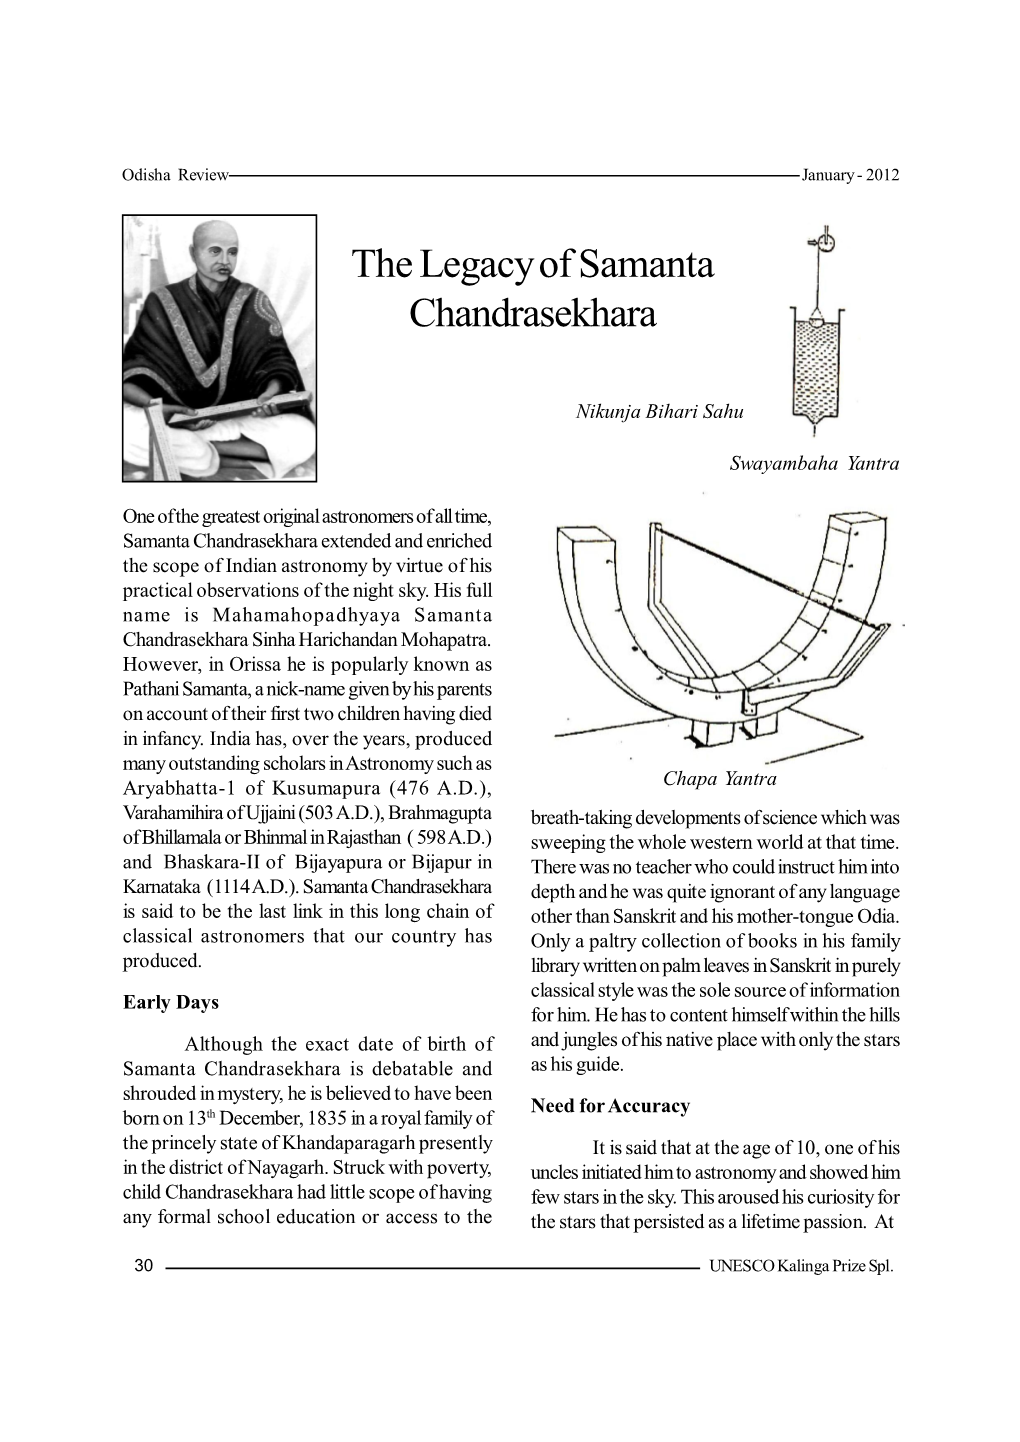 The Legacy of Samanta Chandrasekhara